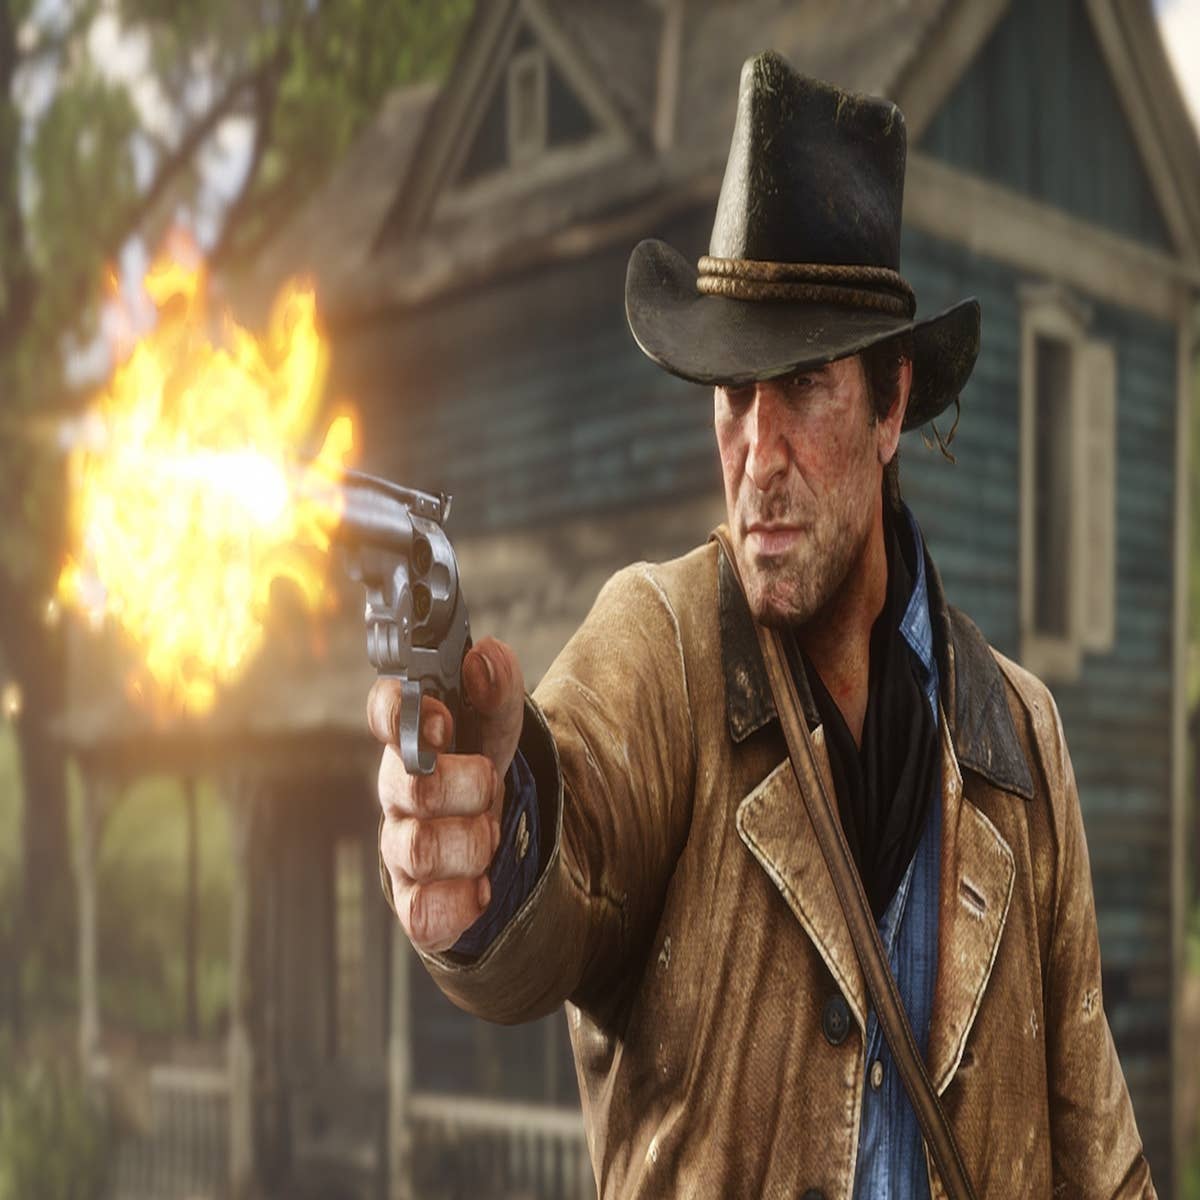 Red Dead Redemption 2 - PC | GameStop